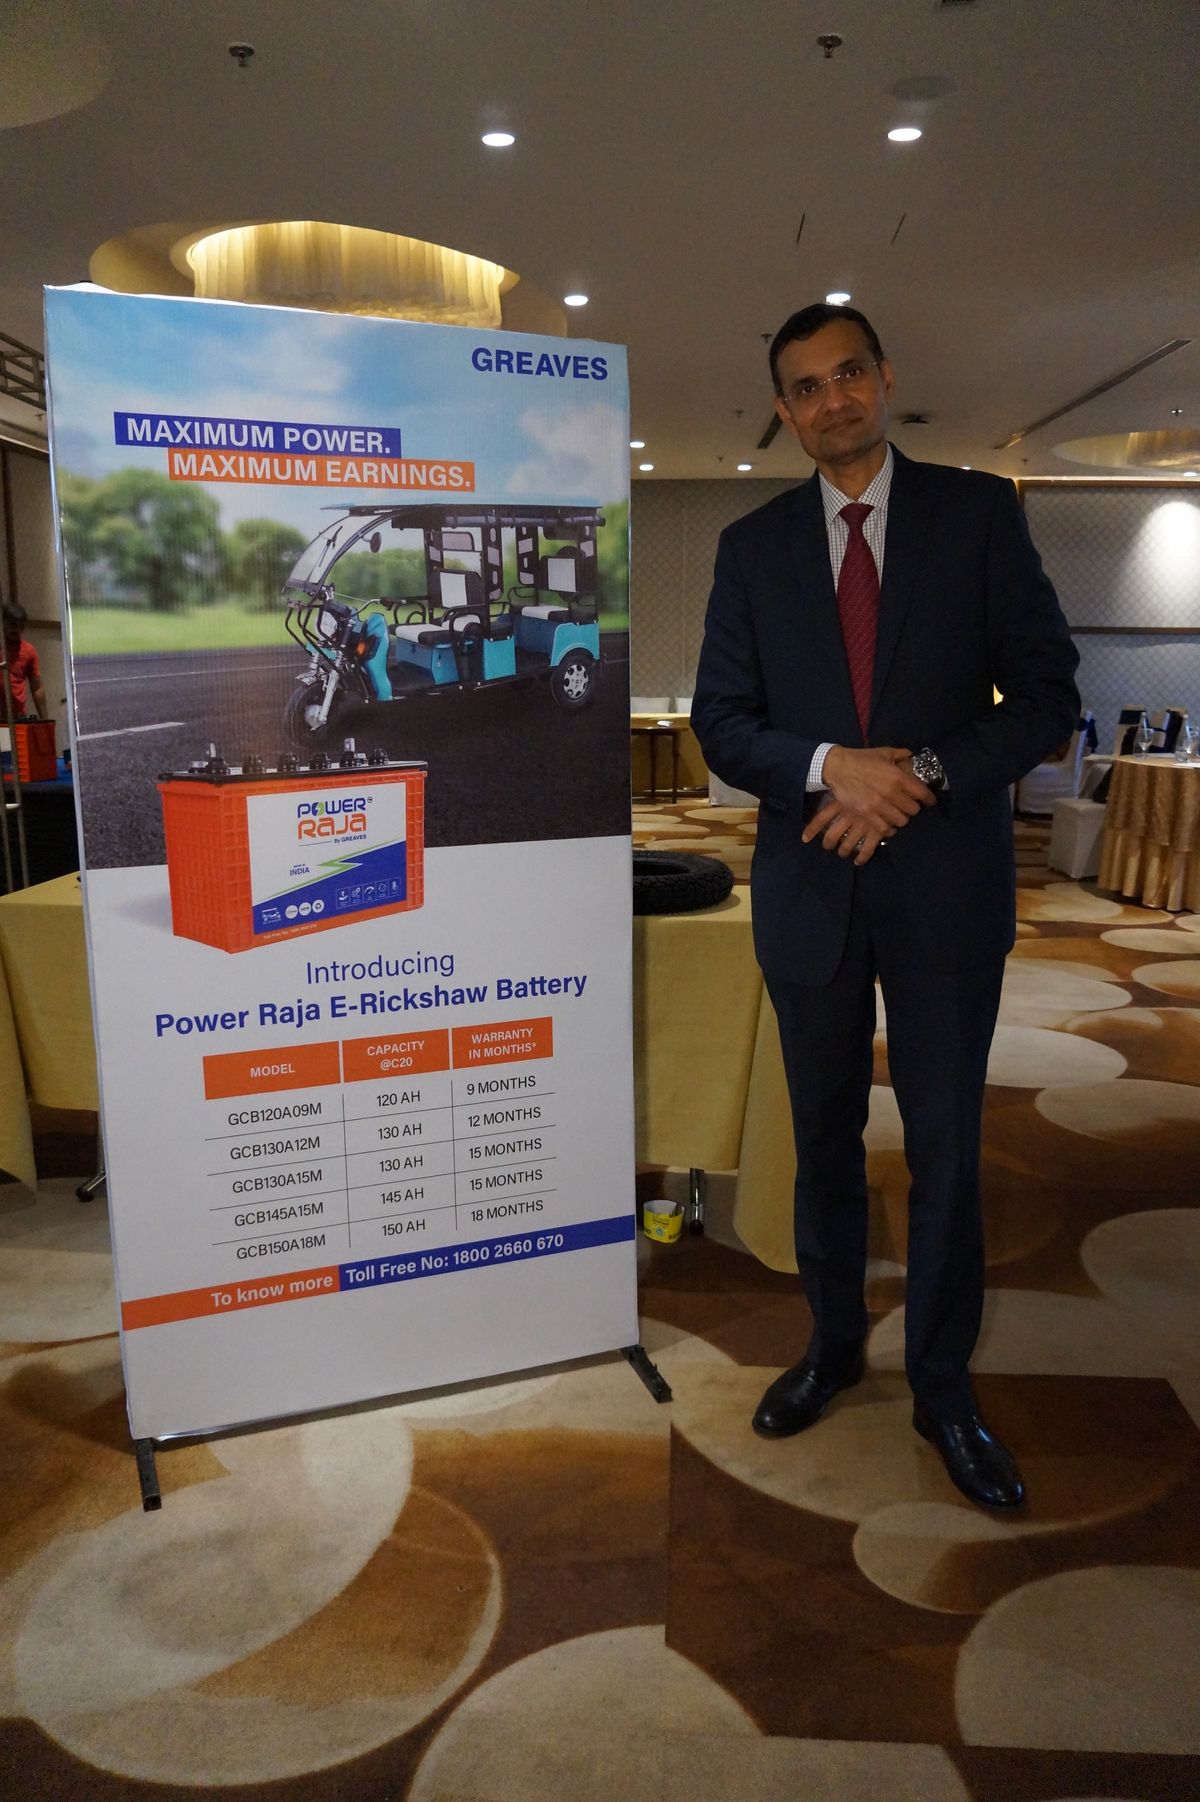 Greaves Retail launches Power Raja:  A Comprehensive Range of E-Rickshaw Batteries